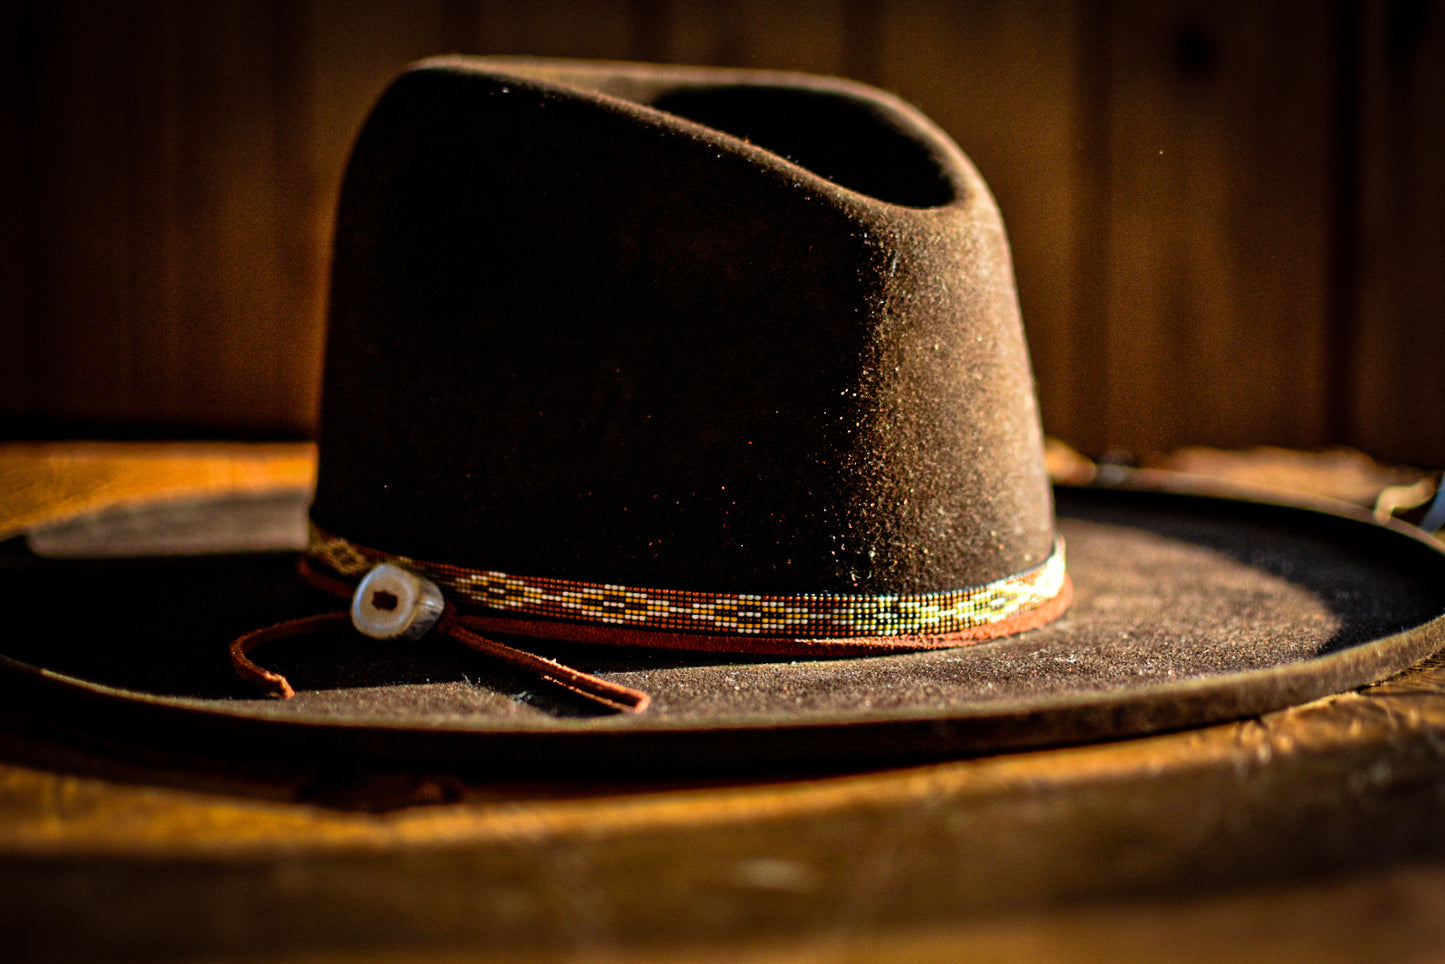 Hat Band — “Buck Creek” in brown